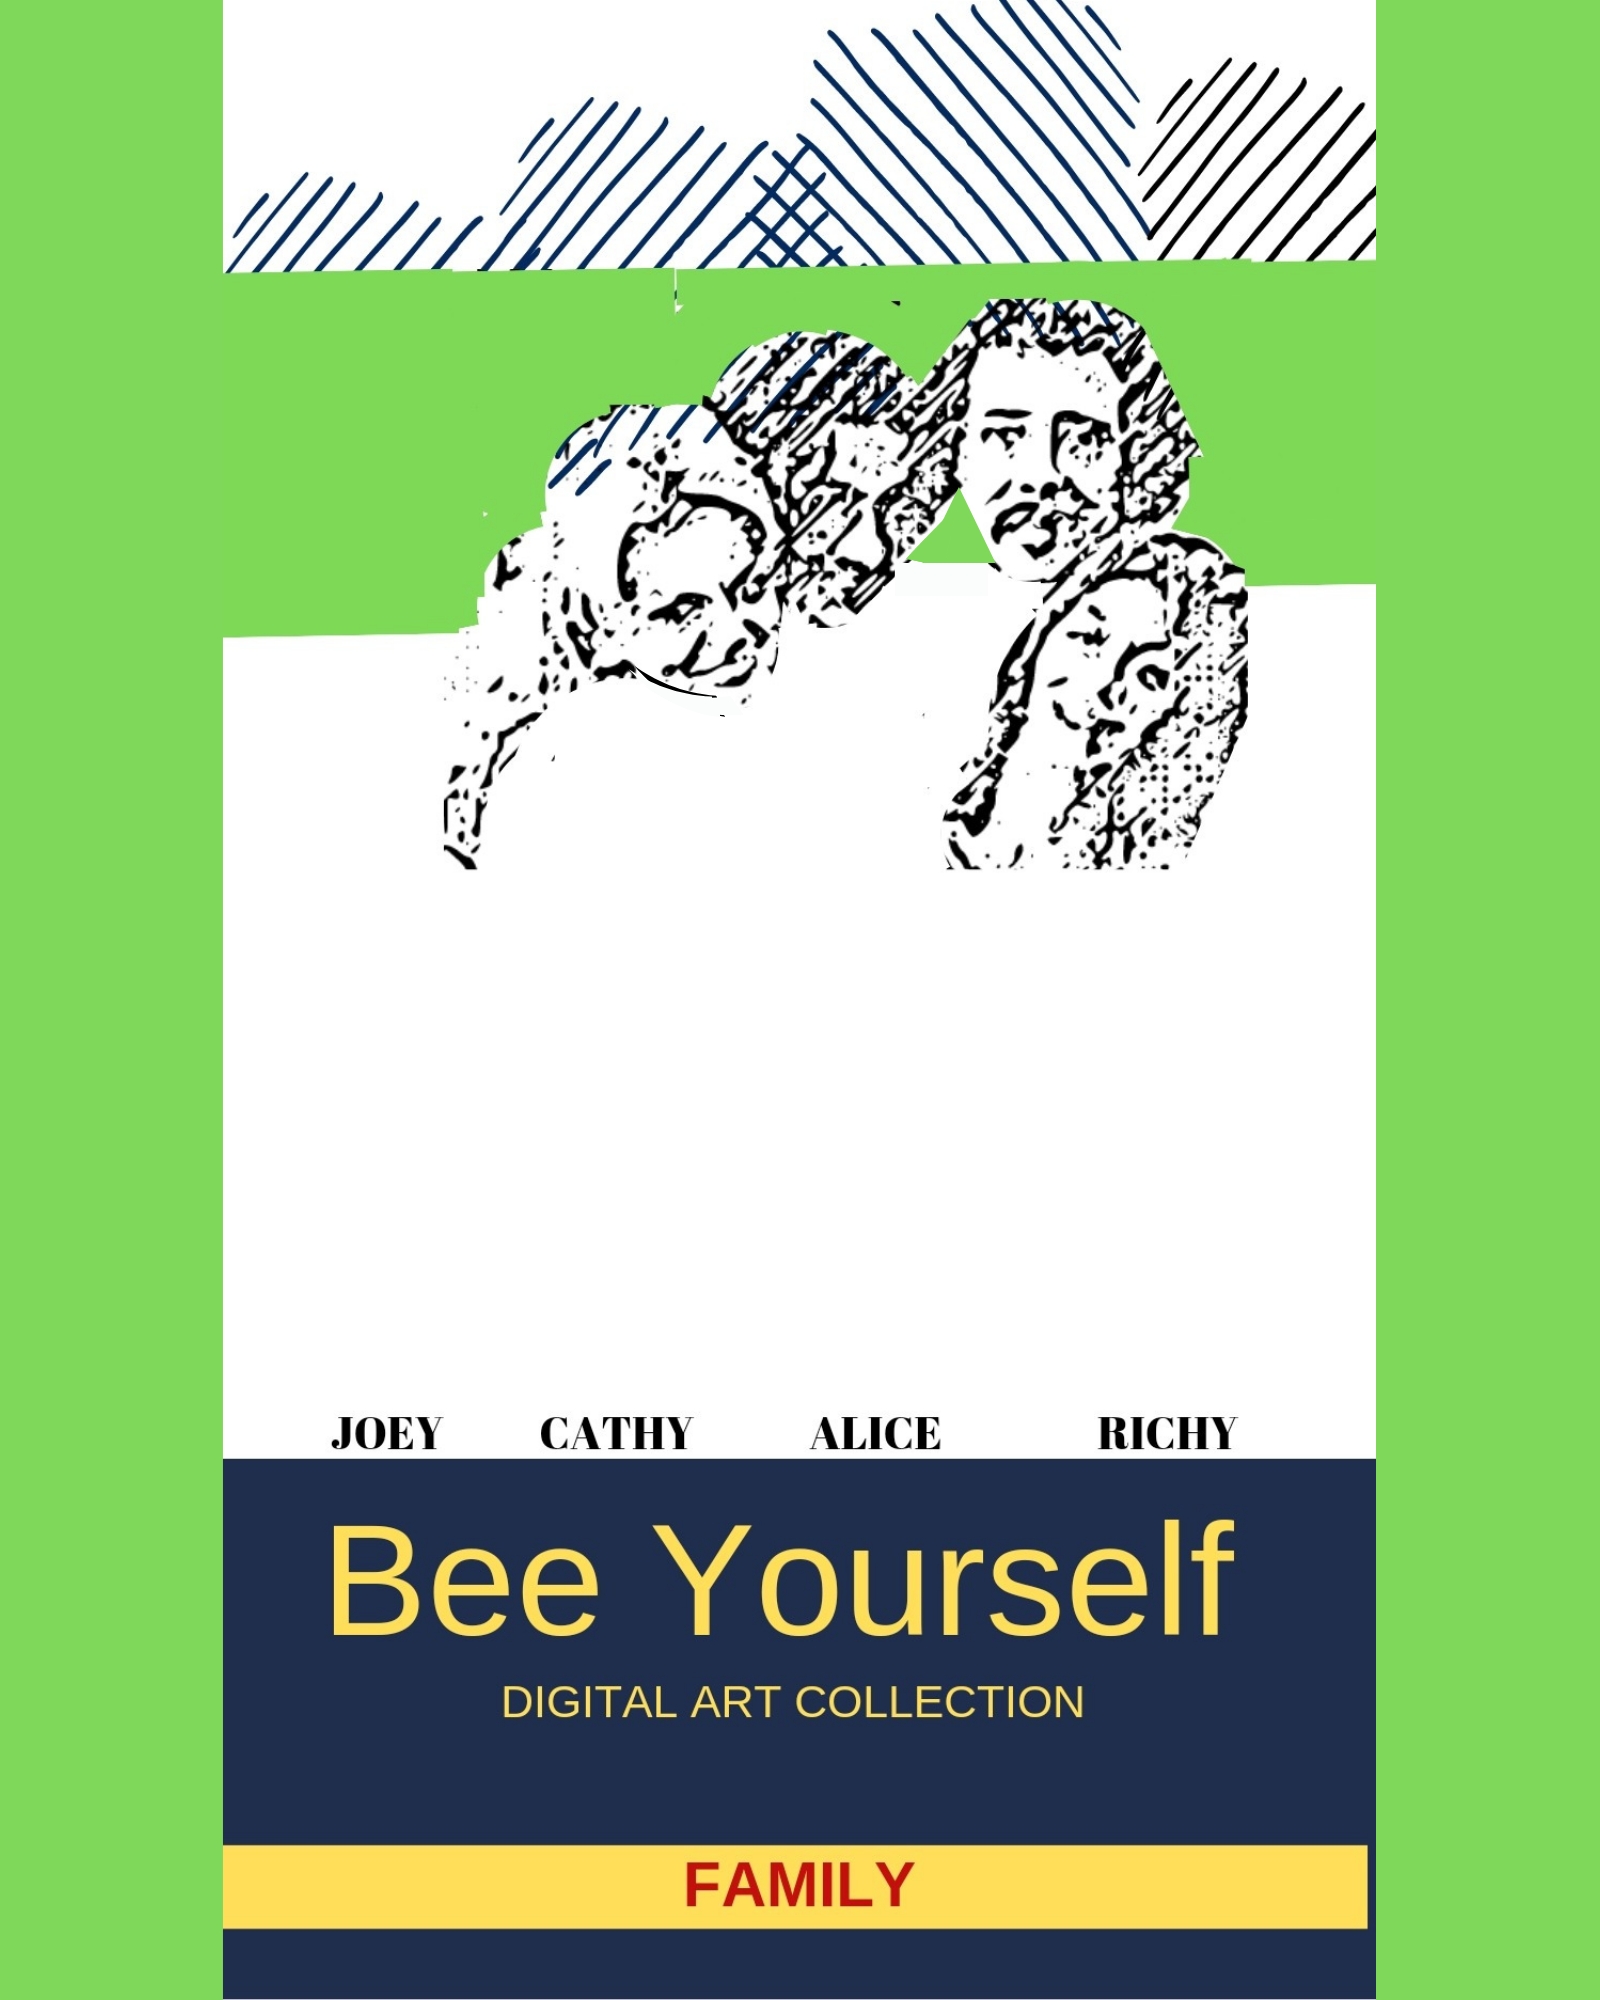 Bee Yourself Team Portraits – Installed on NYC Digital Billboards